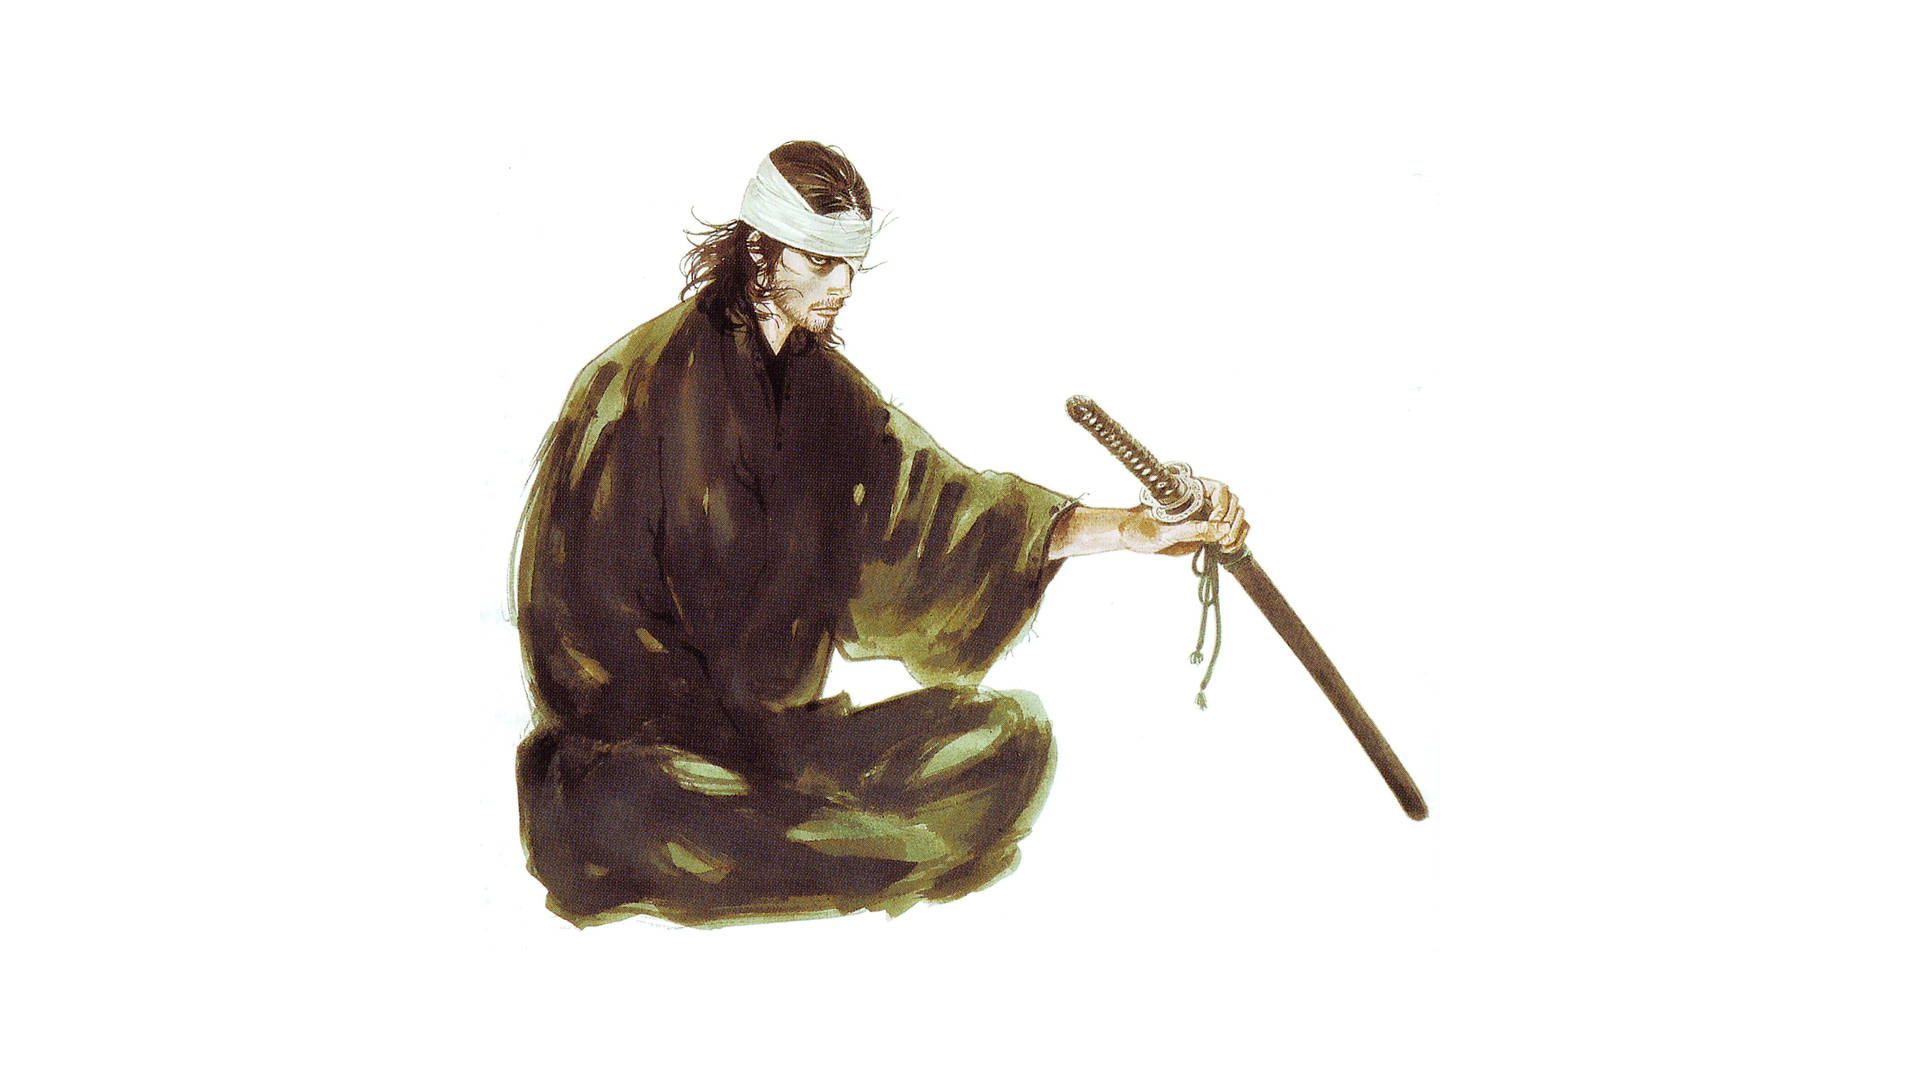 Musashi Vagabond Holding Sword Background